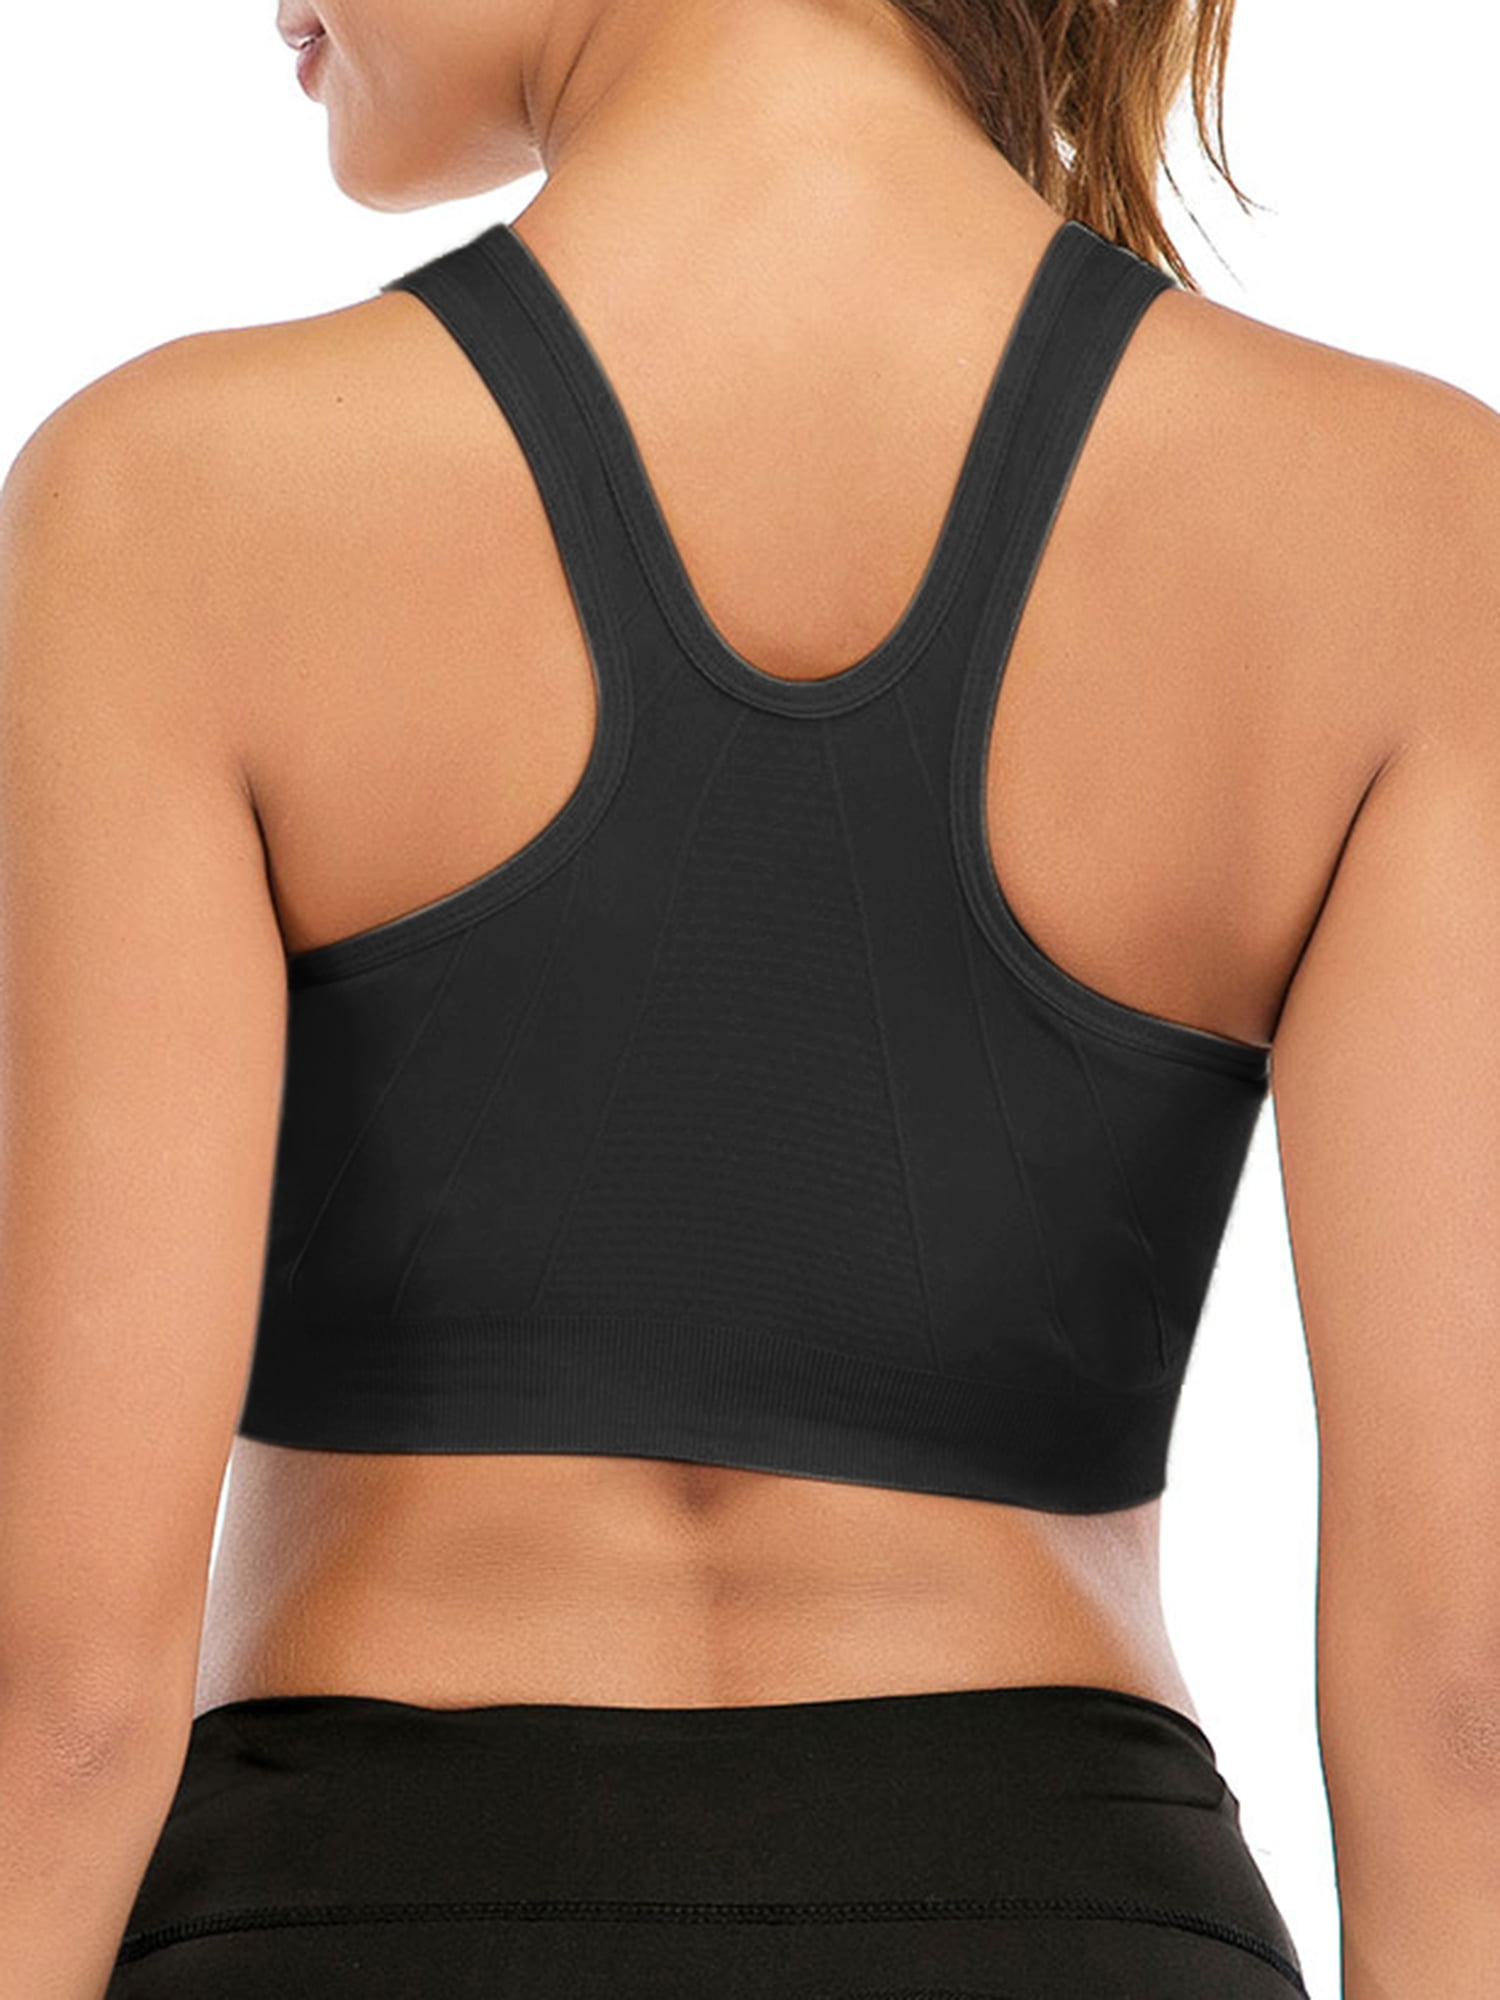 Dayoke Sports Bra Front Zip Adjustable Velcro Racer Back Padded Grey, One  Size, for Women/Yoga/Gym/Workout : : Fashion